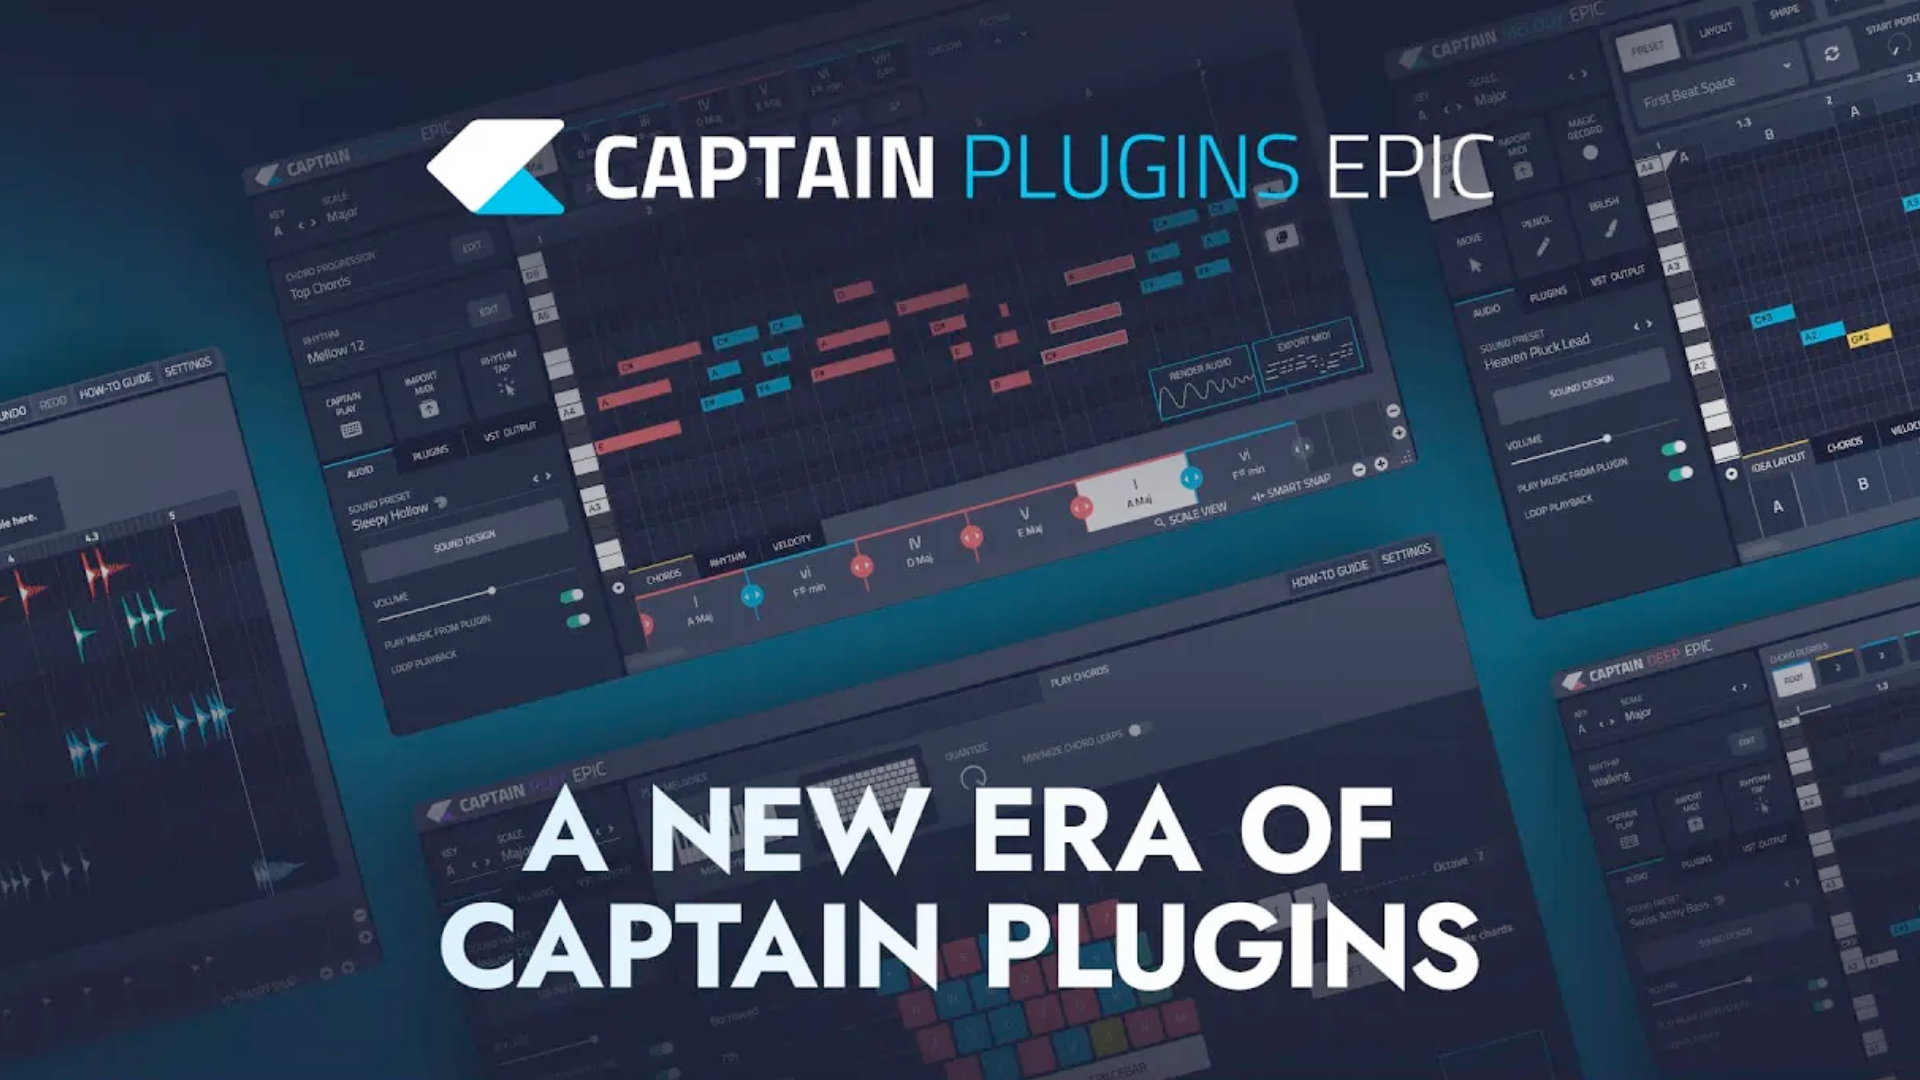 mixed in key captain plugins torrent